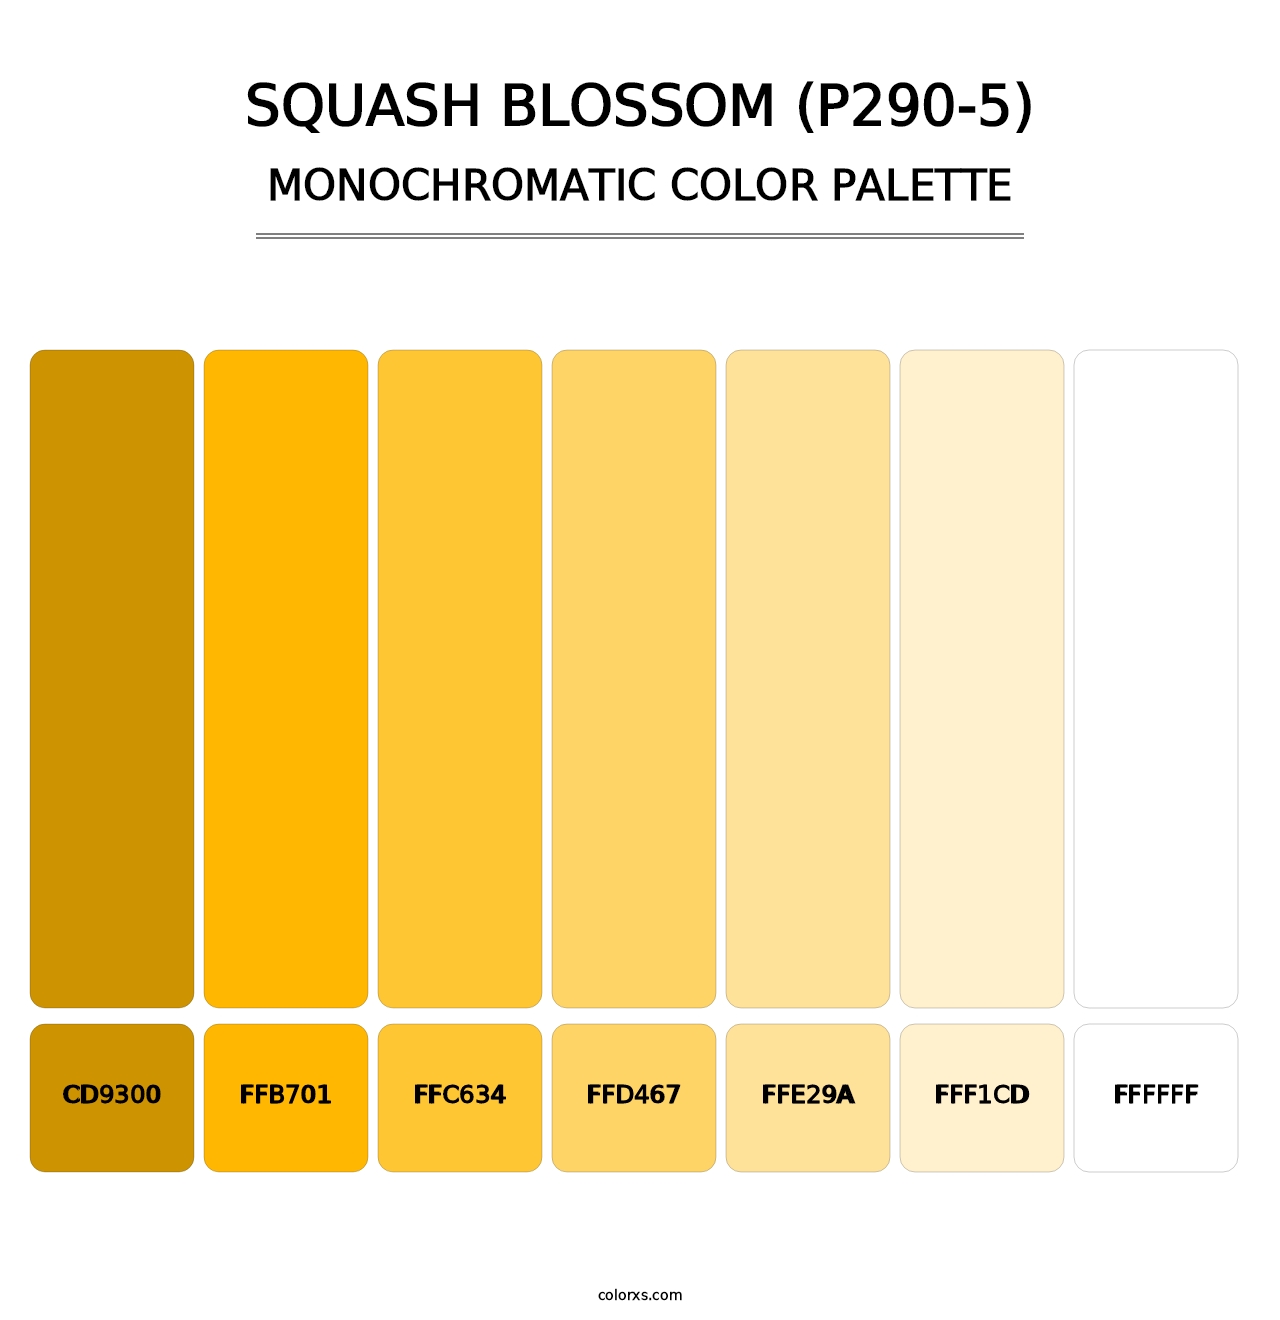 Squash Blossom (P290-5) - Monochromatic Color Palette